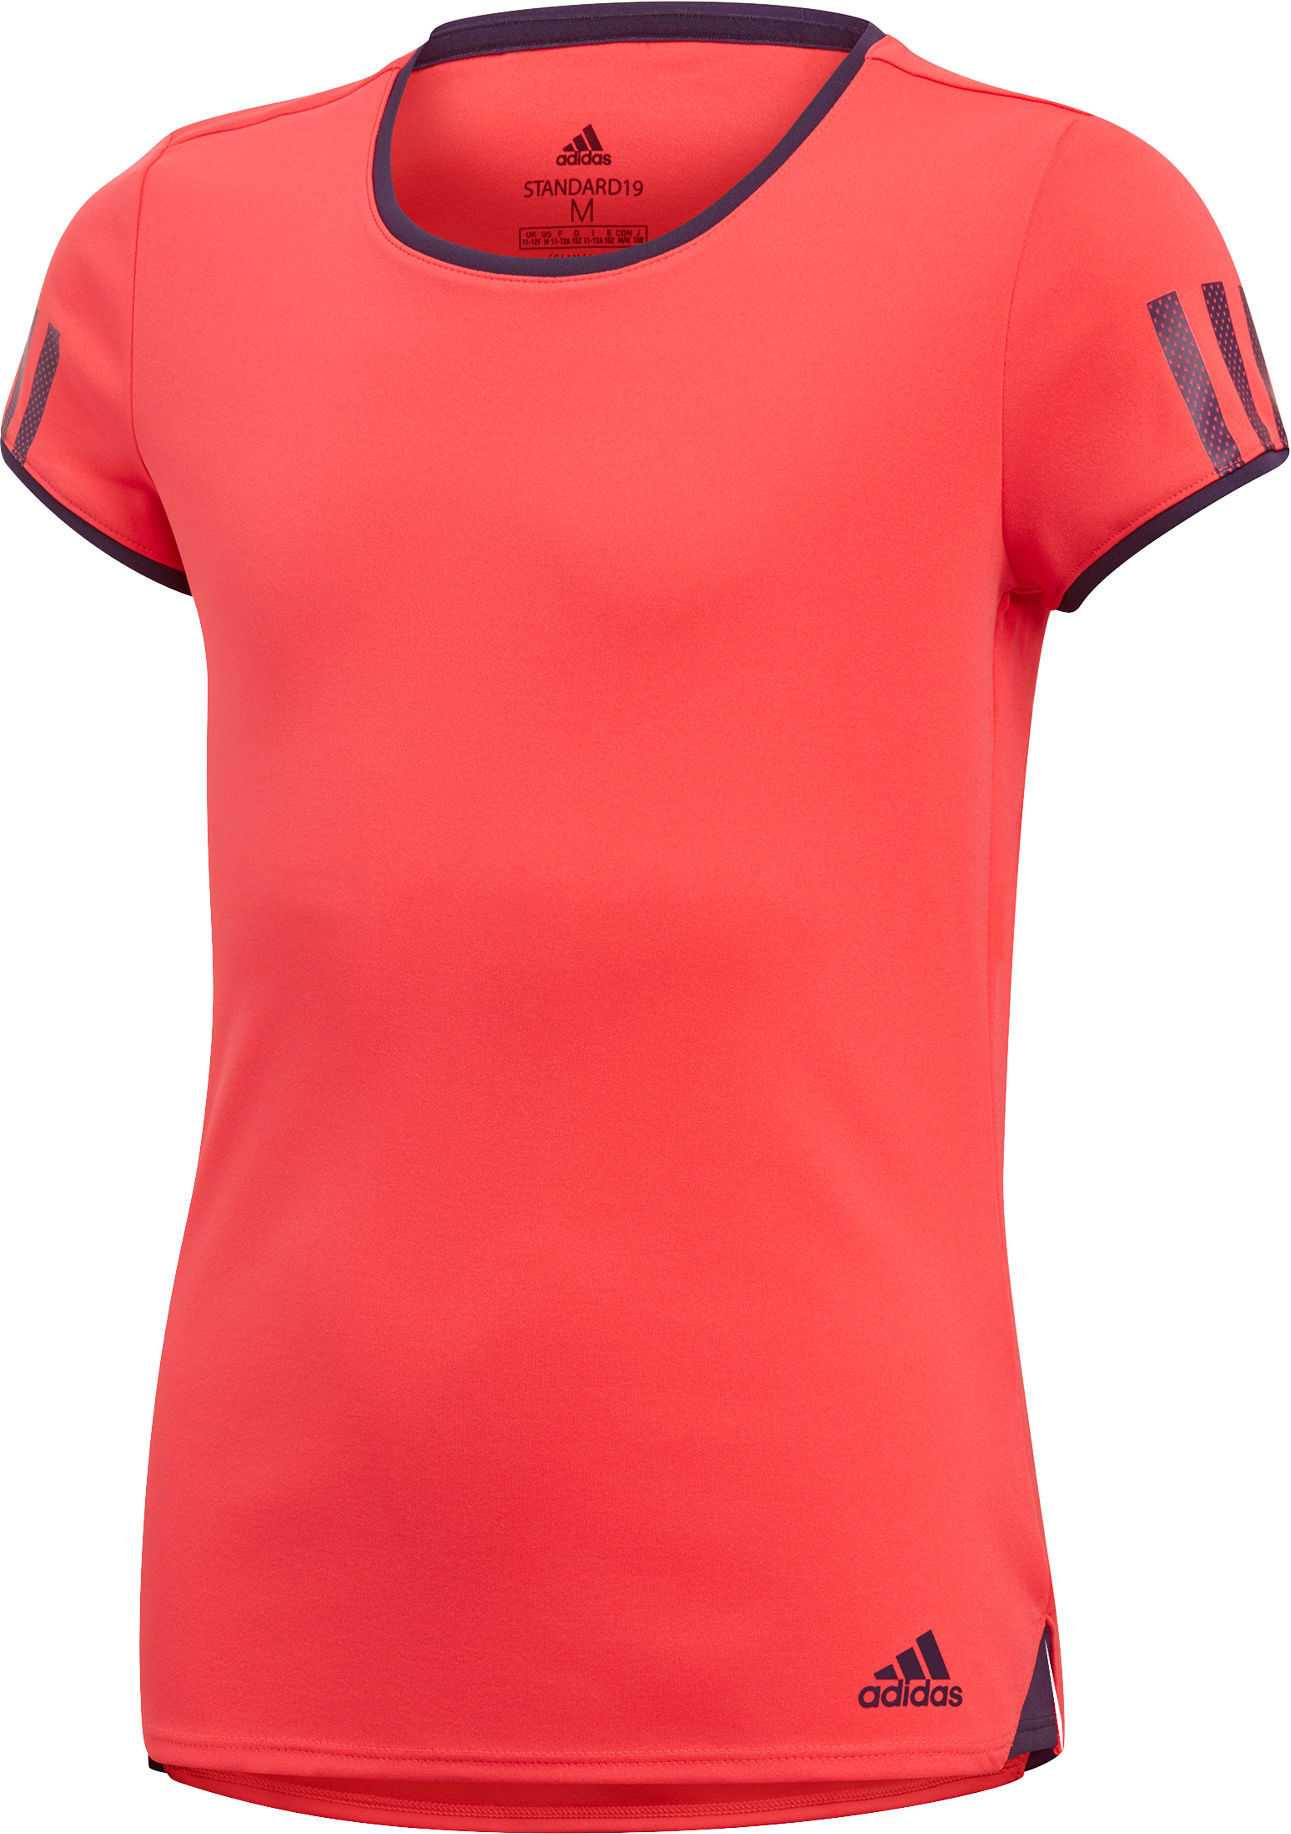 Adidas Girls Club T-shirt Träningströja Coral 128